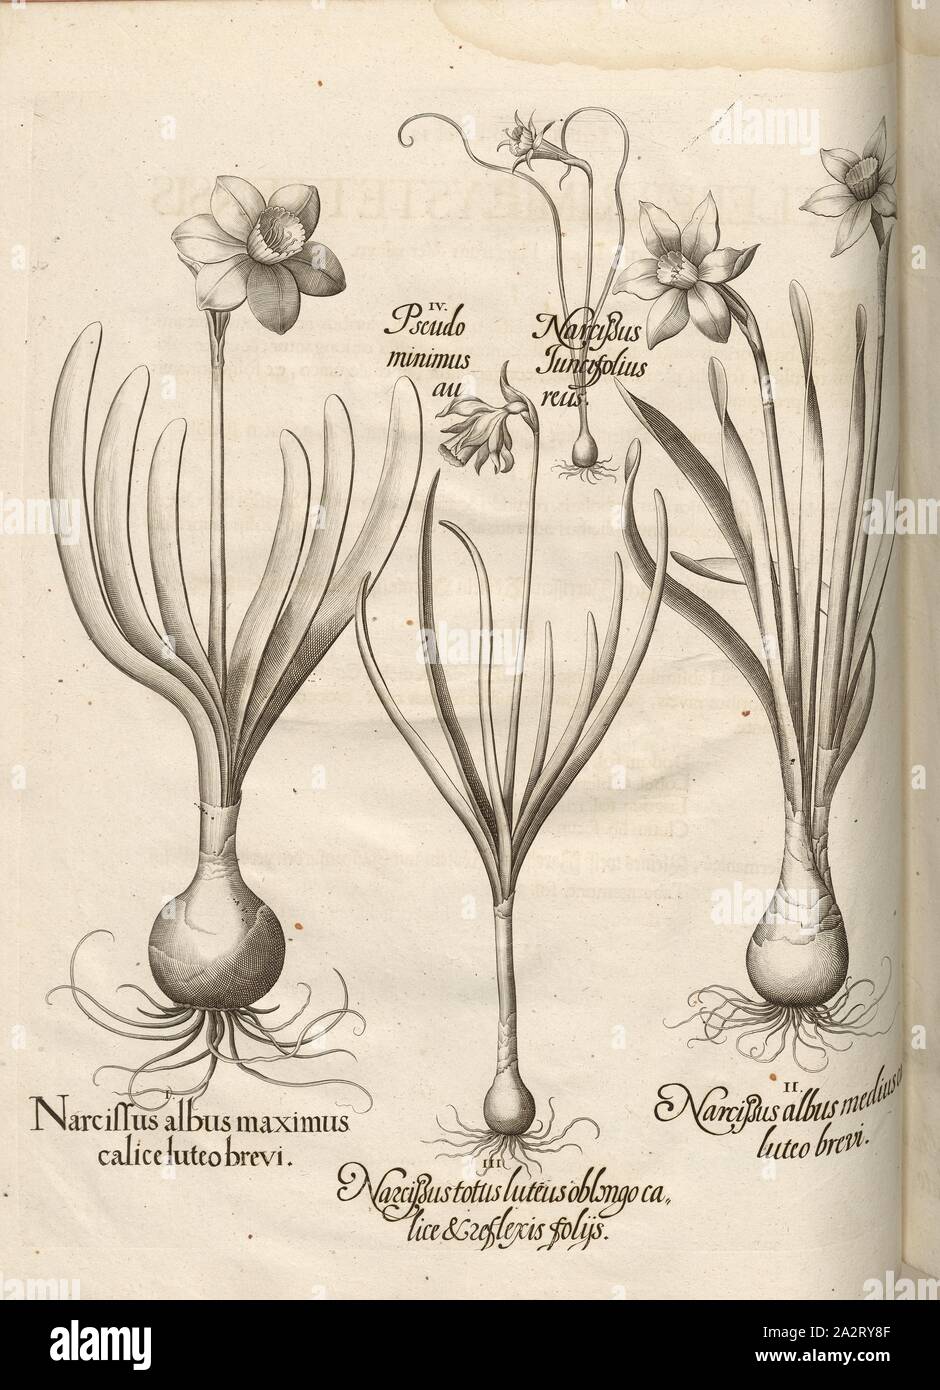 Narcissus ..., Daffodils, Copperplate, p. 140, Besler, Basilius; Jungermann, Ludwig, 1713, Basilius Besler: Hortus Eystettensis (...). Nürnberg, 1713 Stock Photo